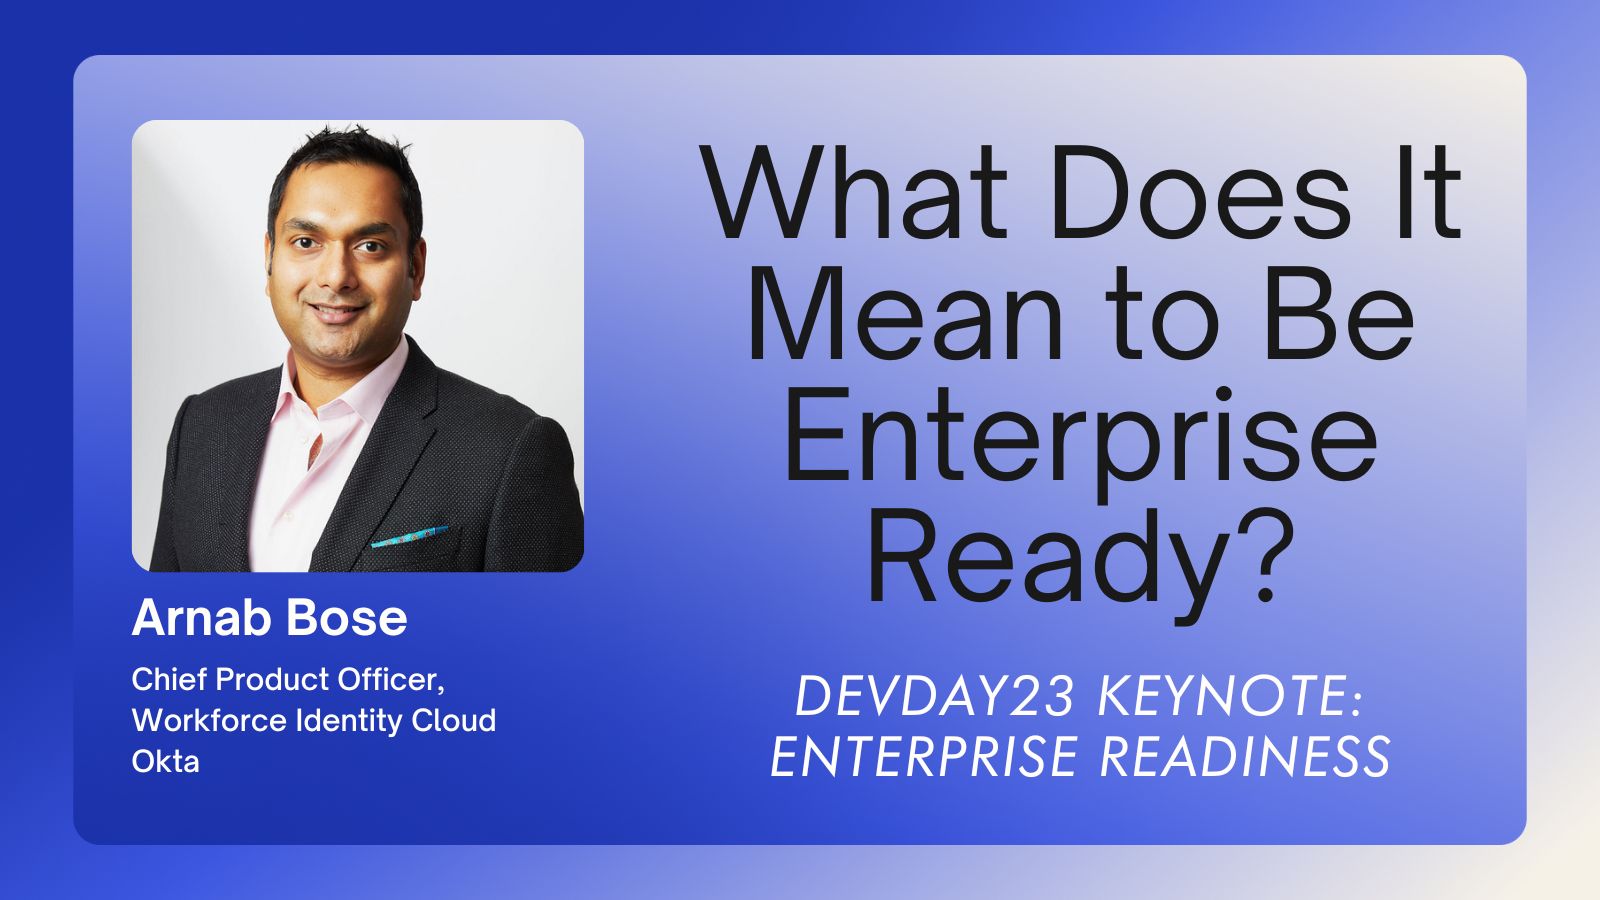 What Does It Mean to Be Enterprise Ready: Devday23 Keynote